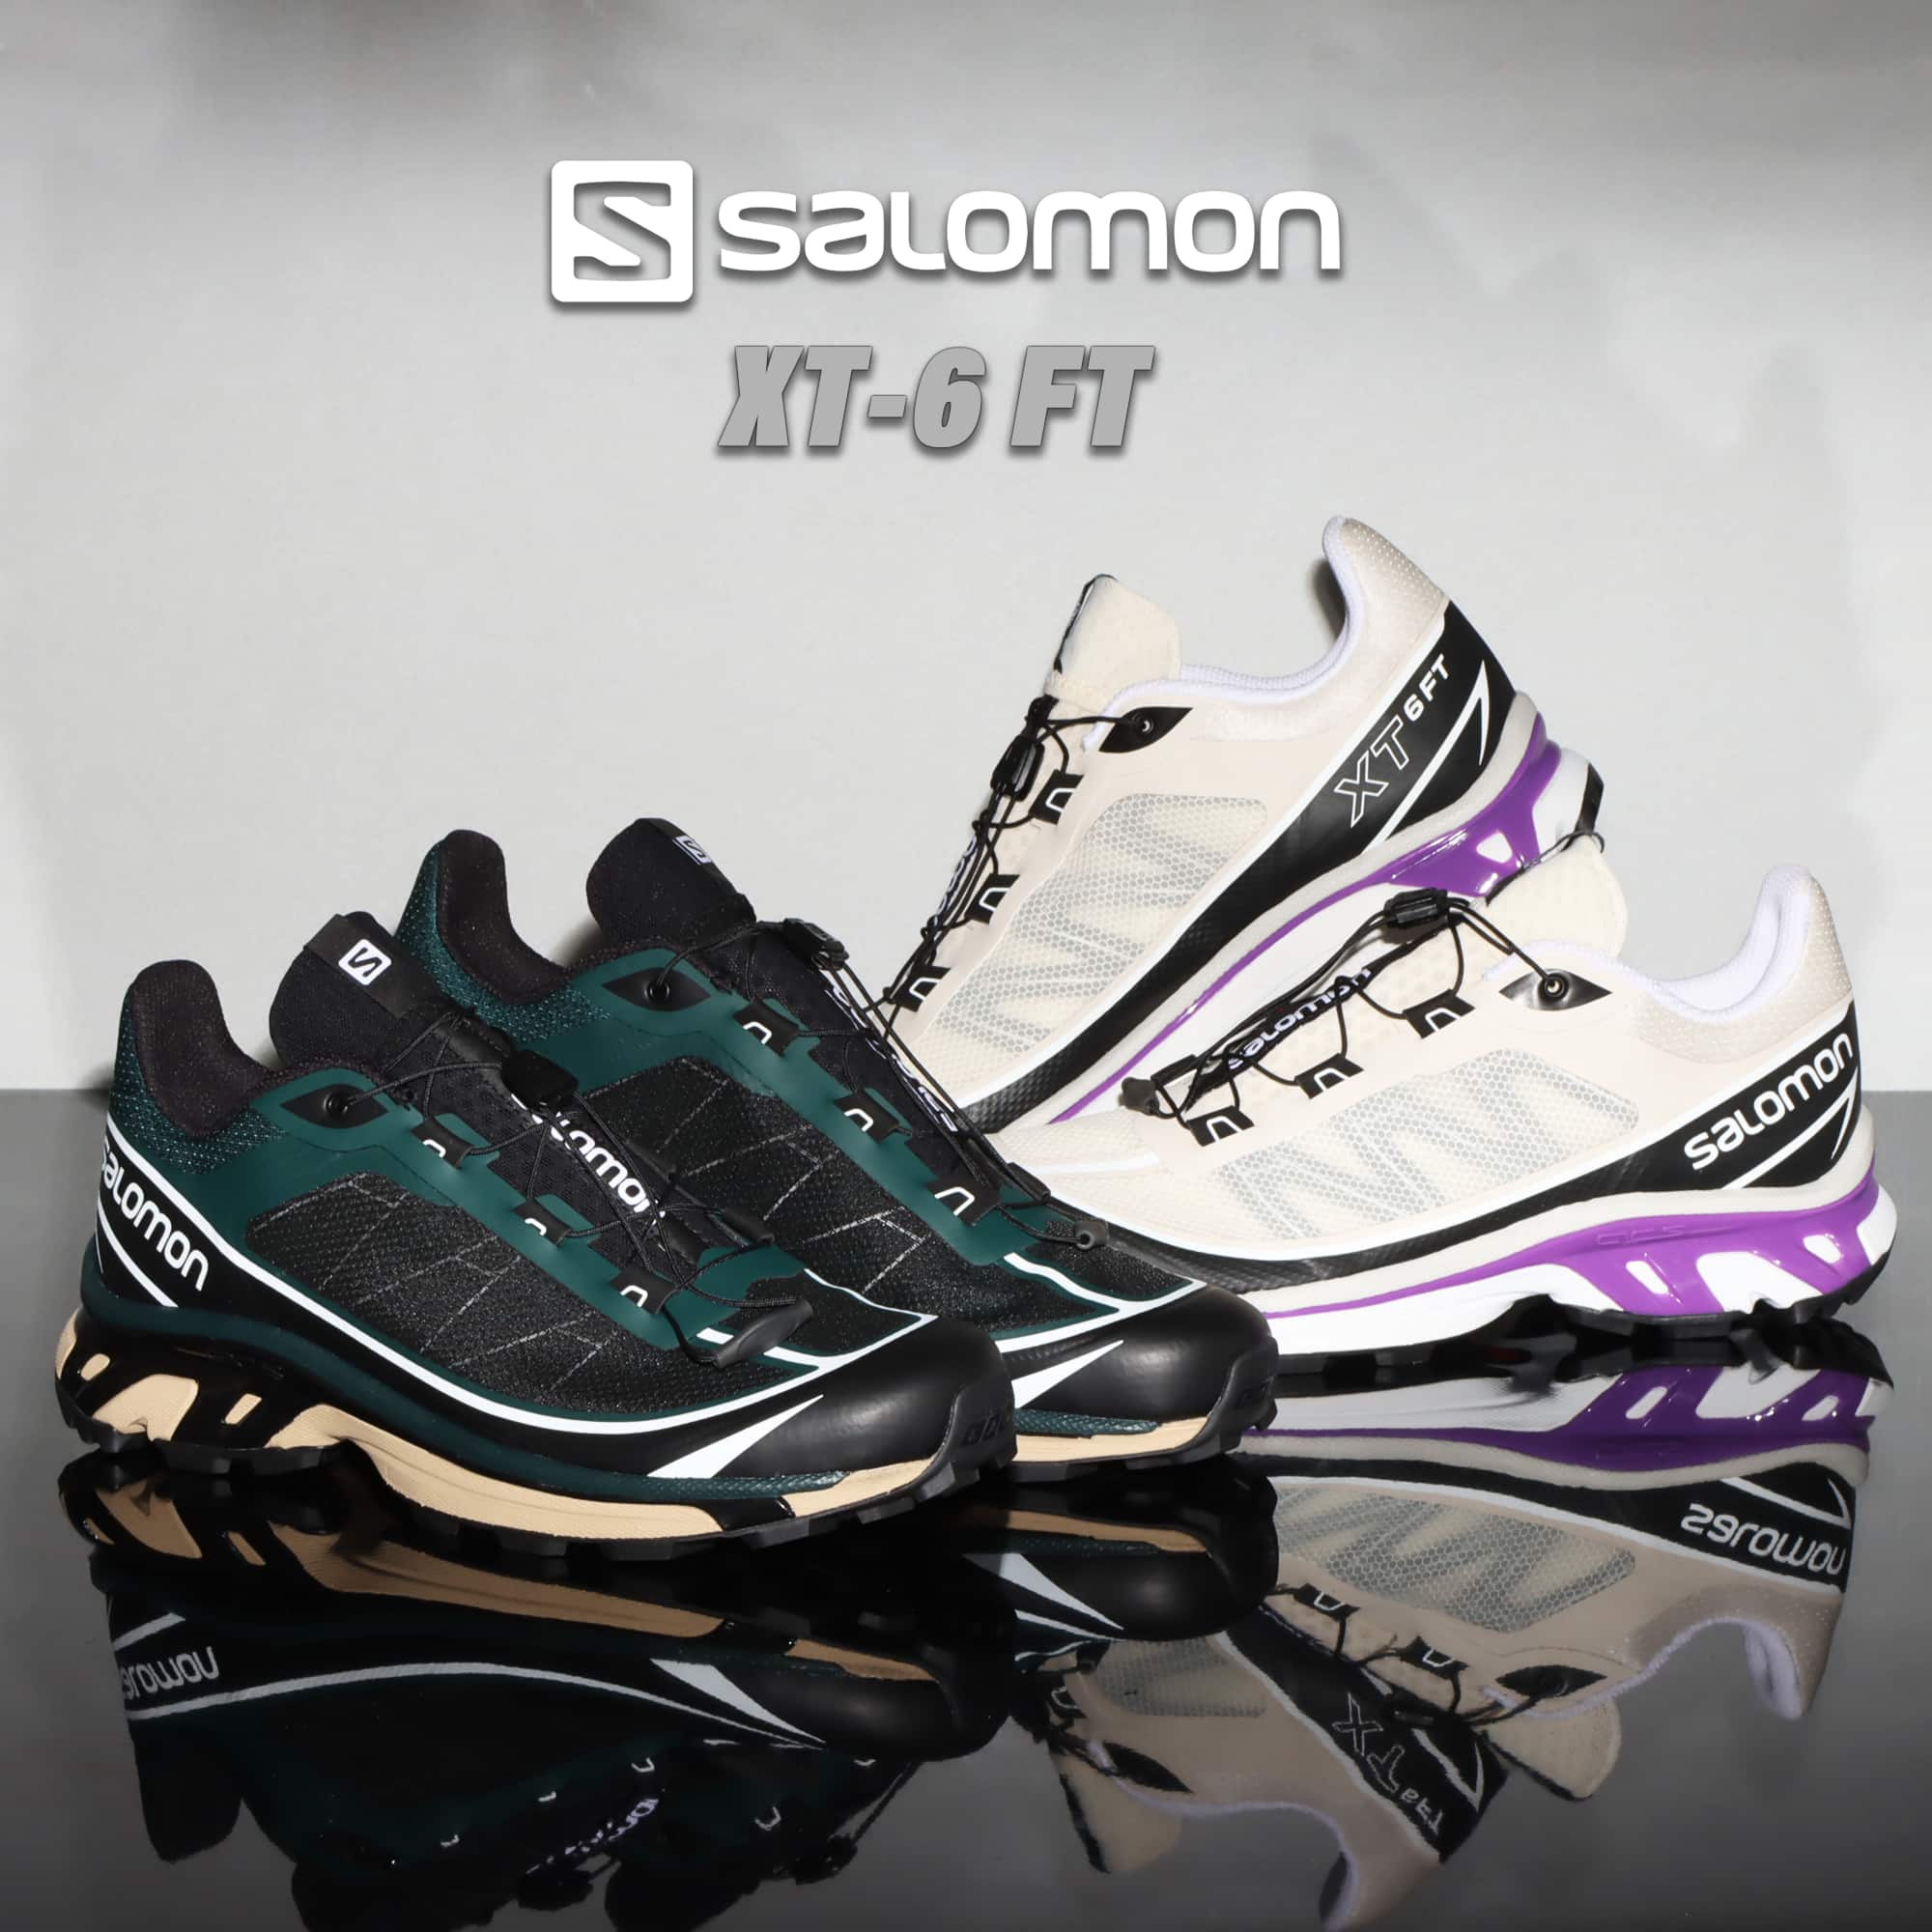 salomon-xt-6-ft